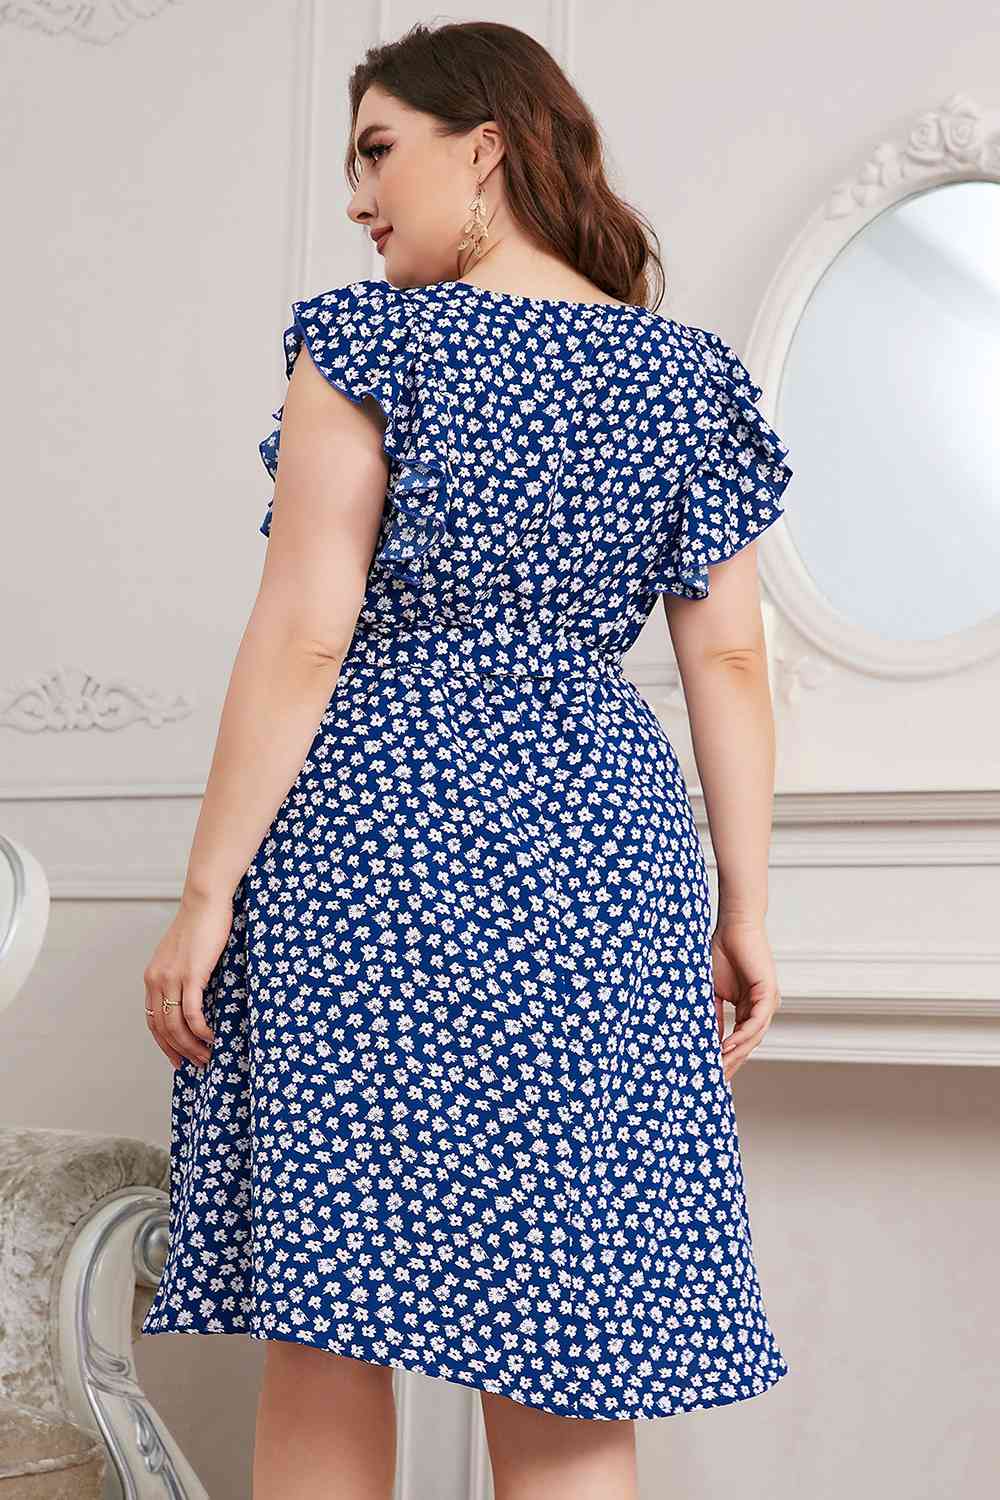 TEEK - Cobalt Blue Plus Size Tie Waist Dress DRESS TEEK Trend   